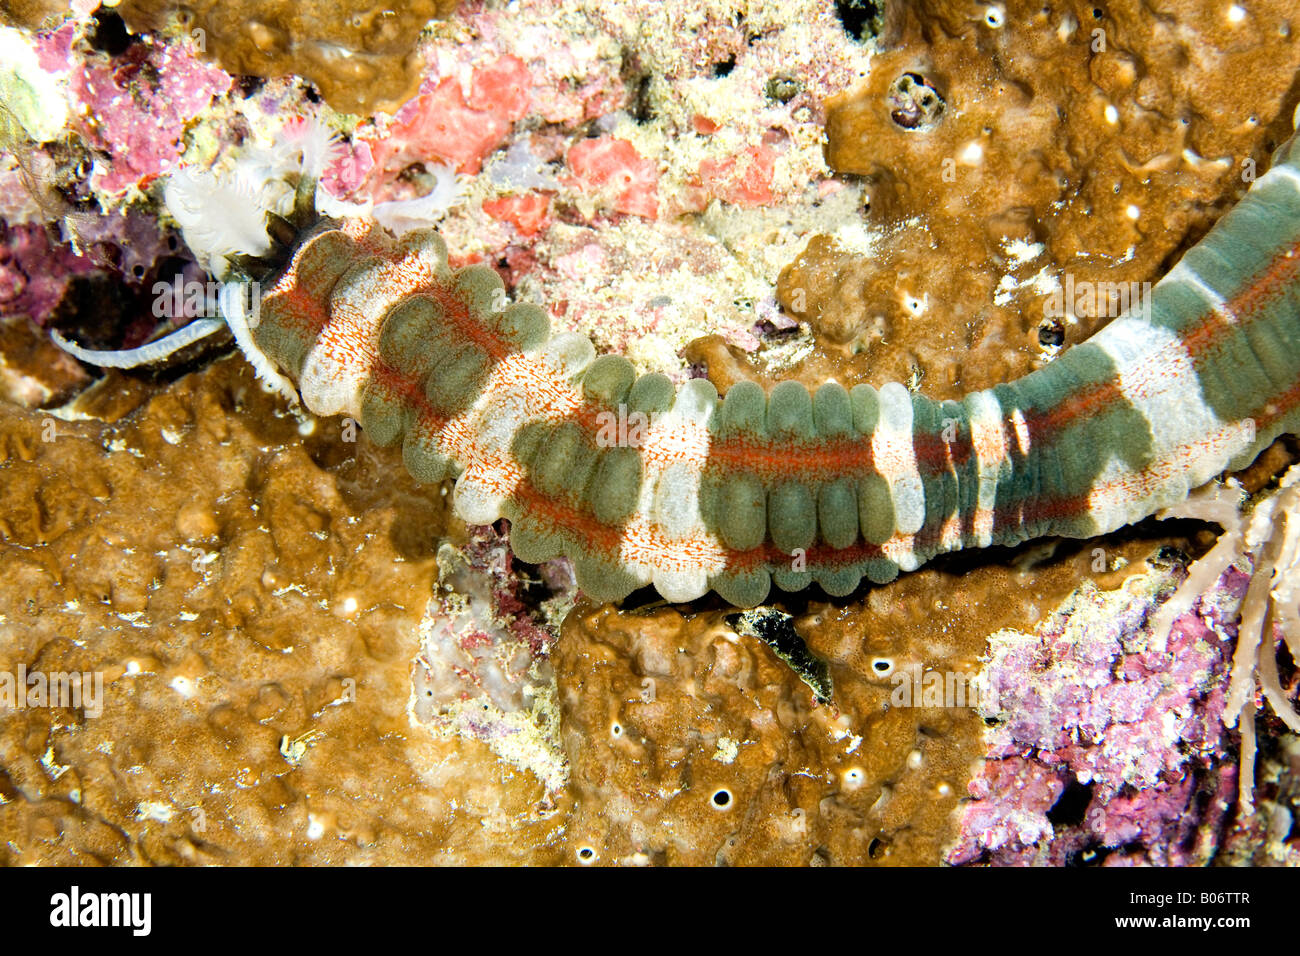 Sea cucumber or holothurian, Polyplectana kefersteinii, feeding on the reef underwater Stock Photo